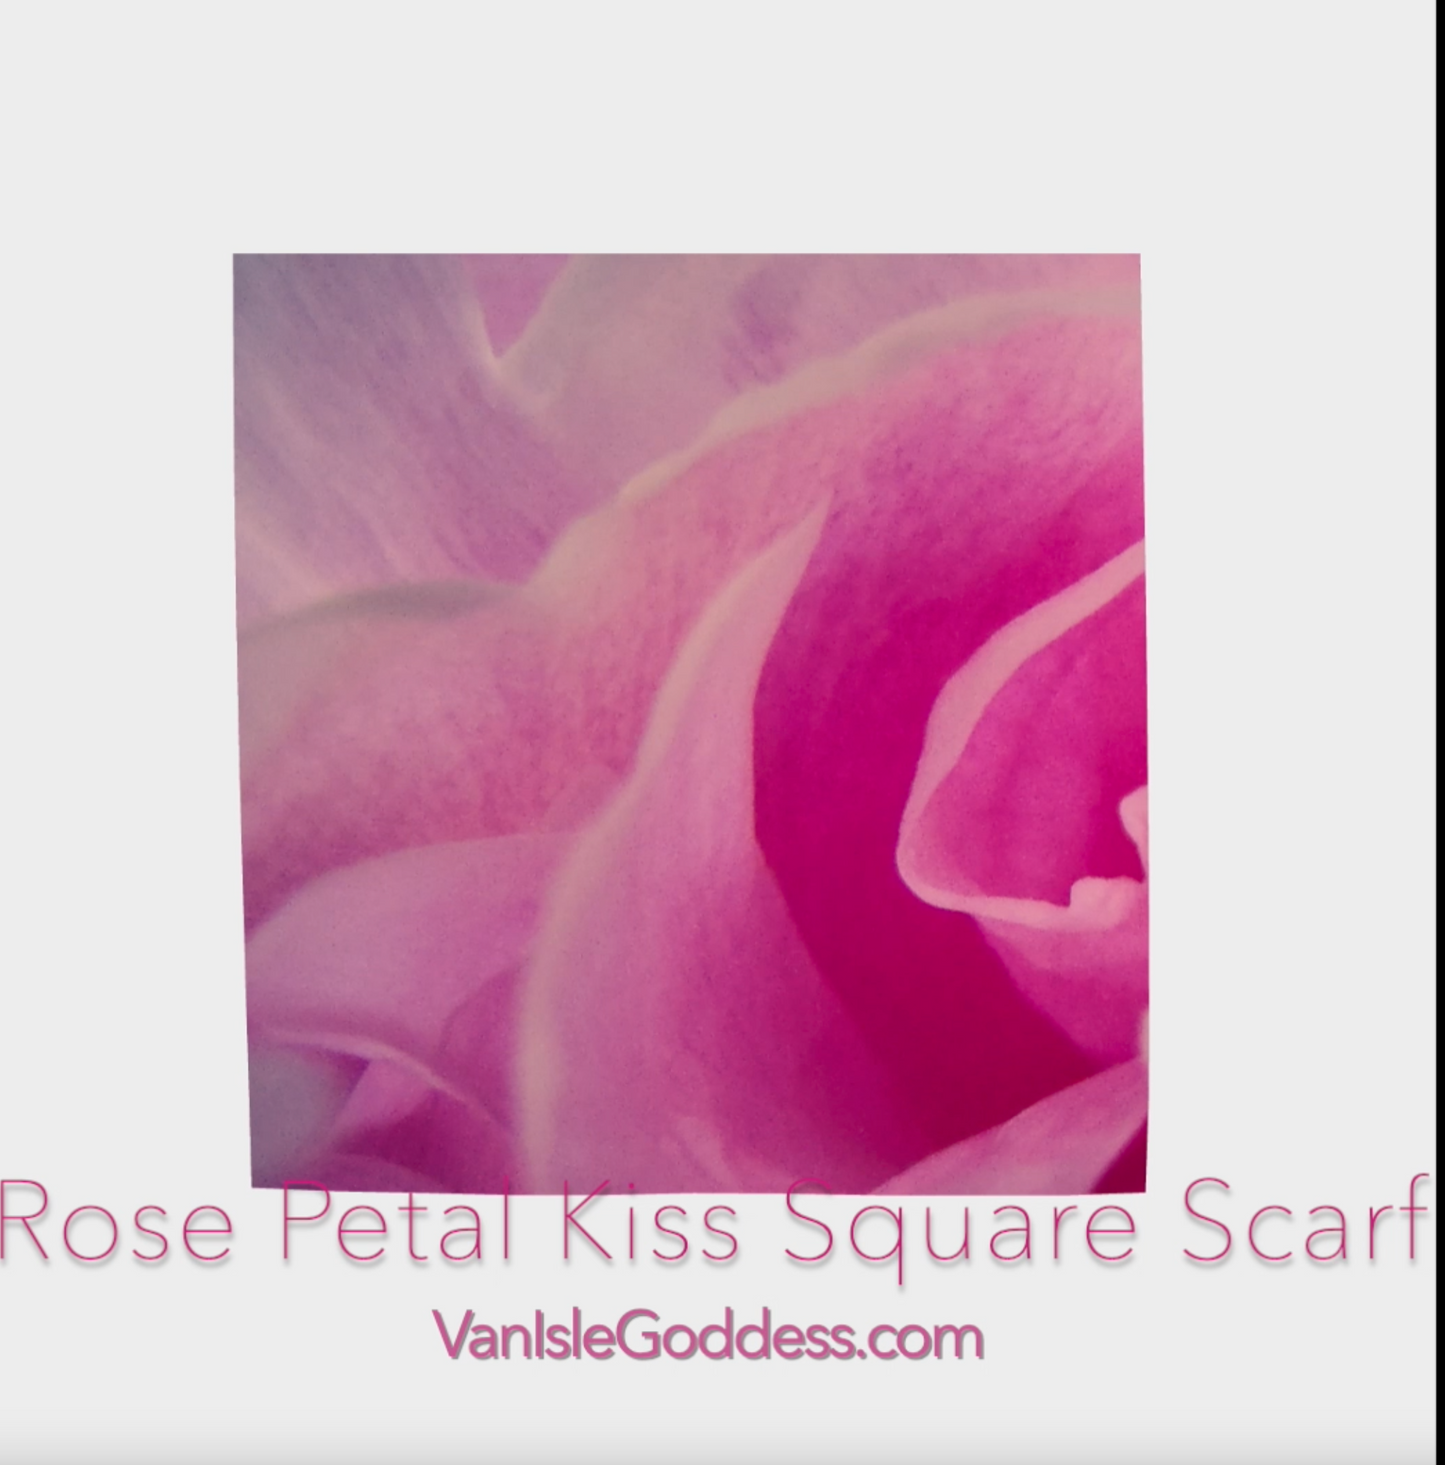 Rose Petal Kiss square scarf shown full size